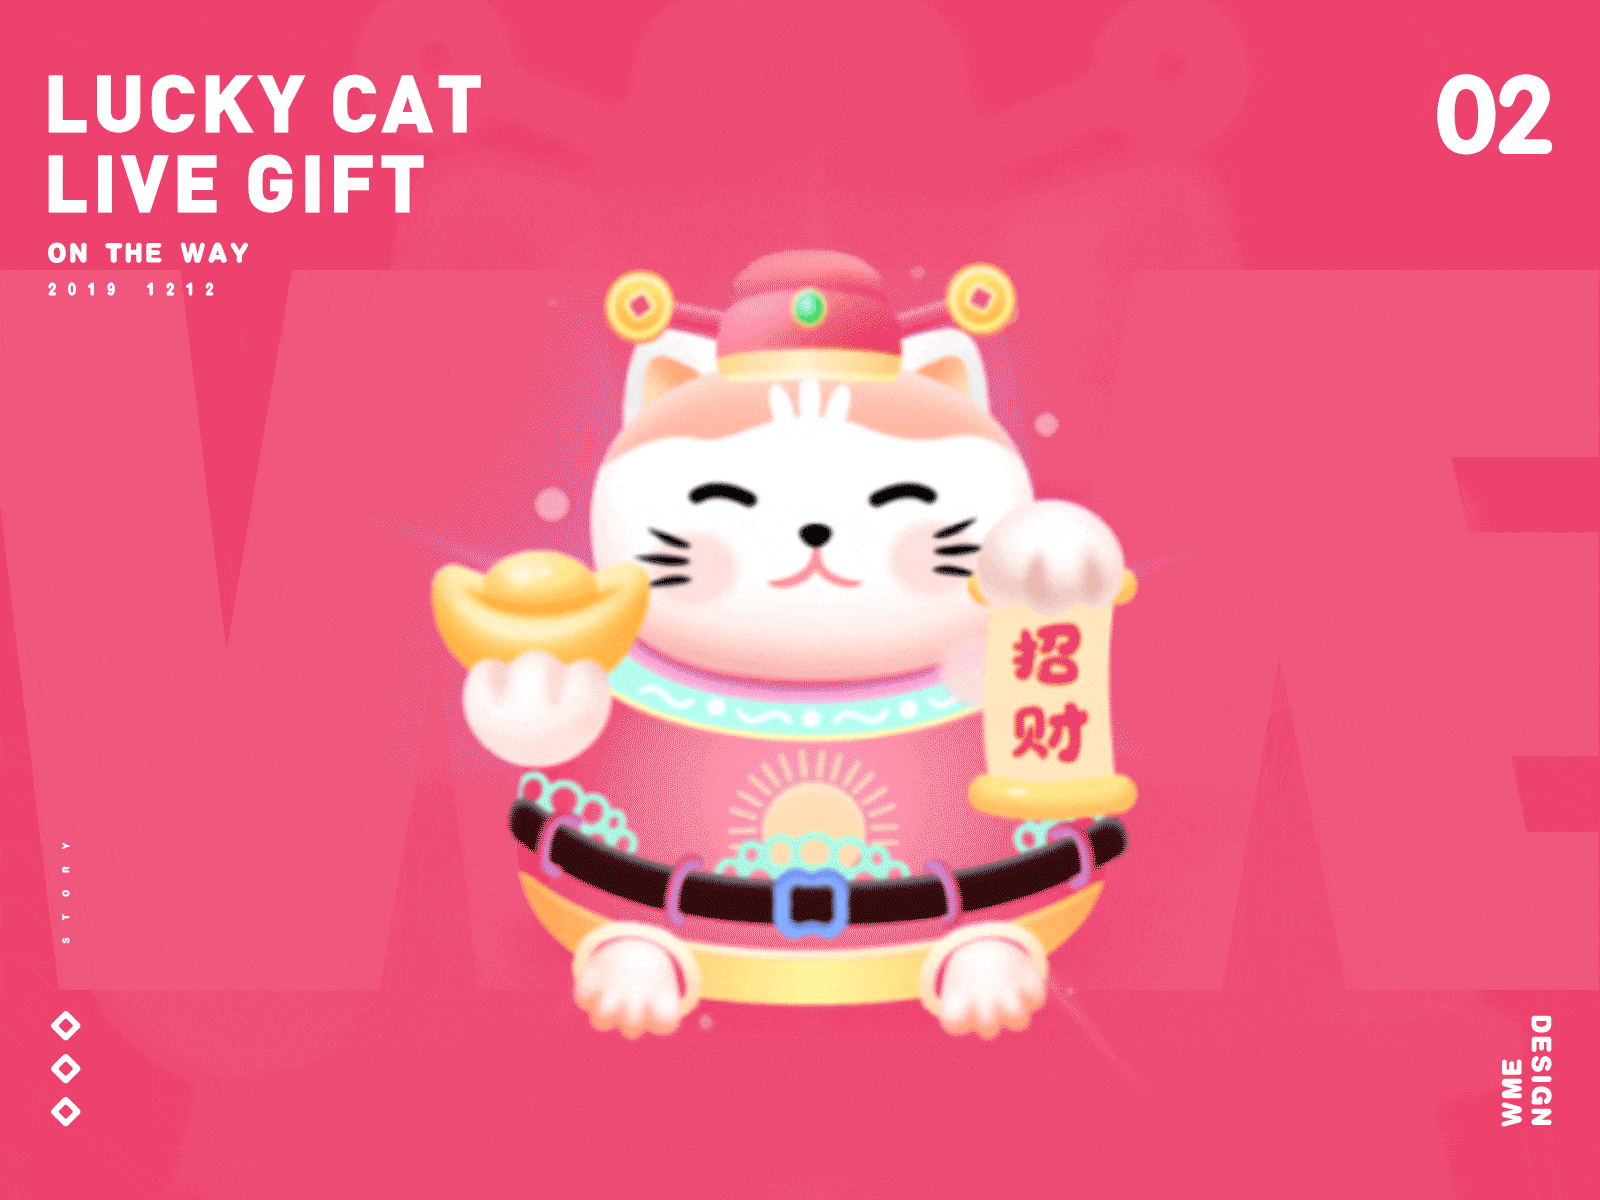 Lucky Cat 2 -Live gift affinity designer cat illustration image live gift wme